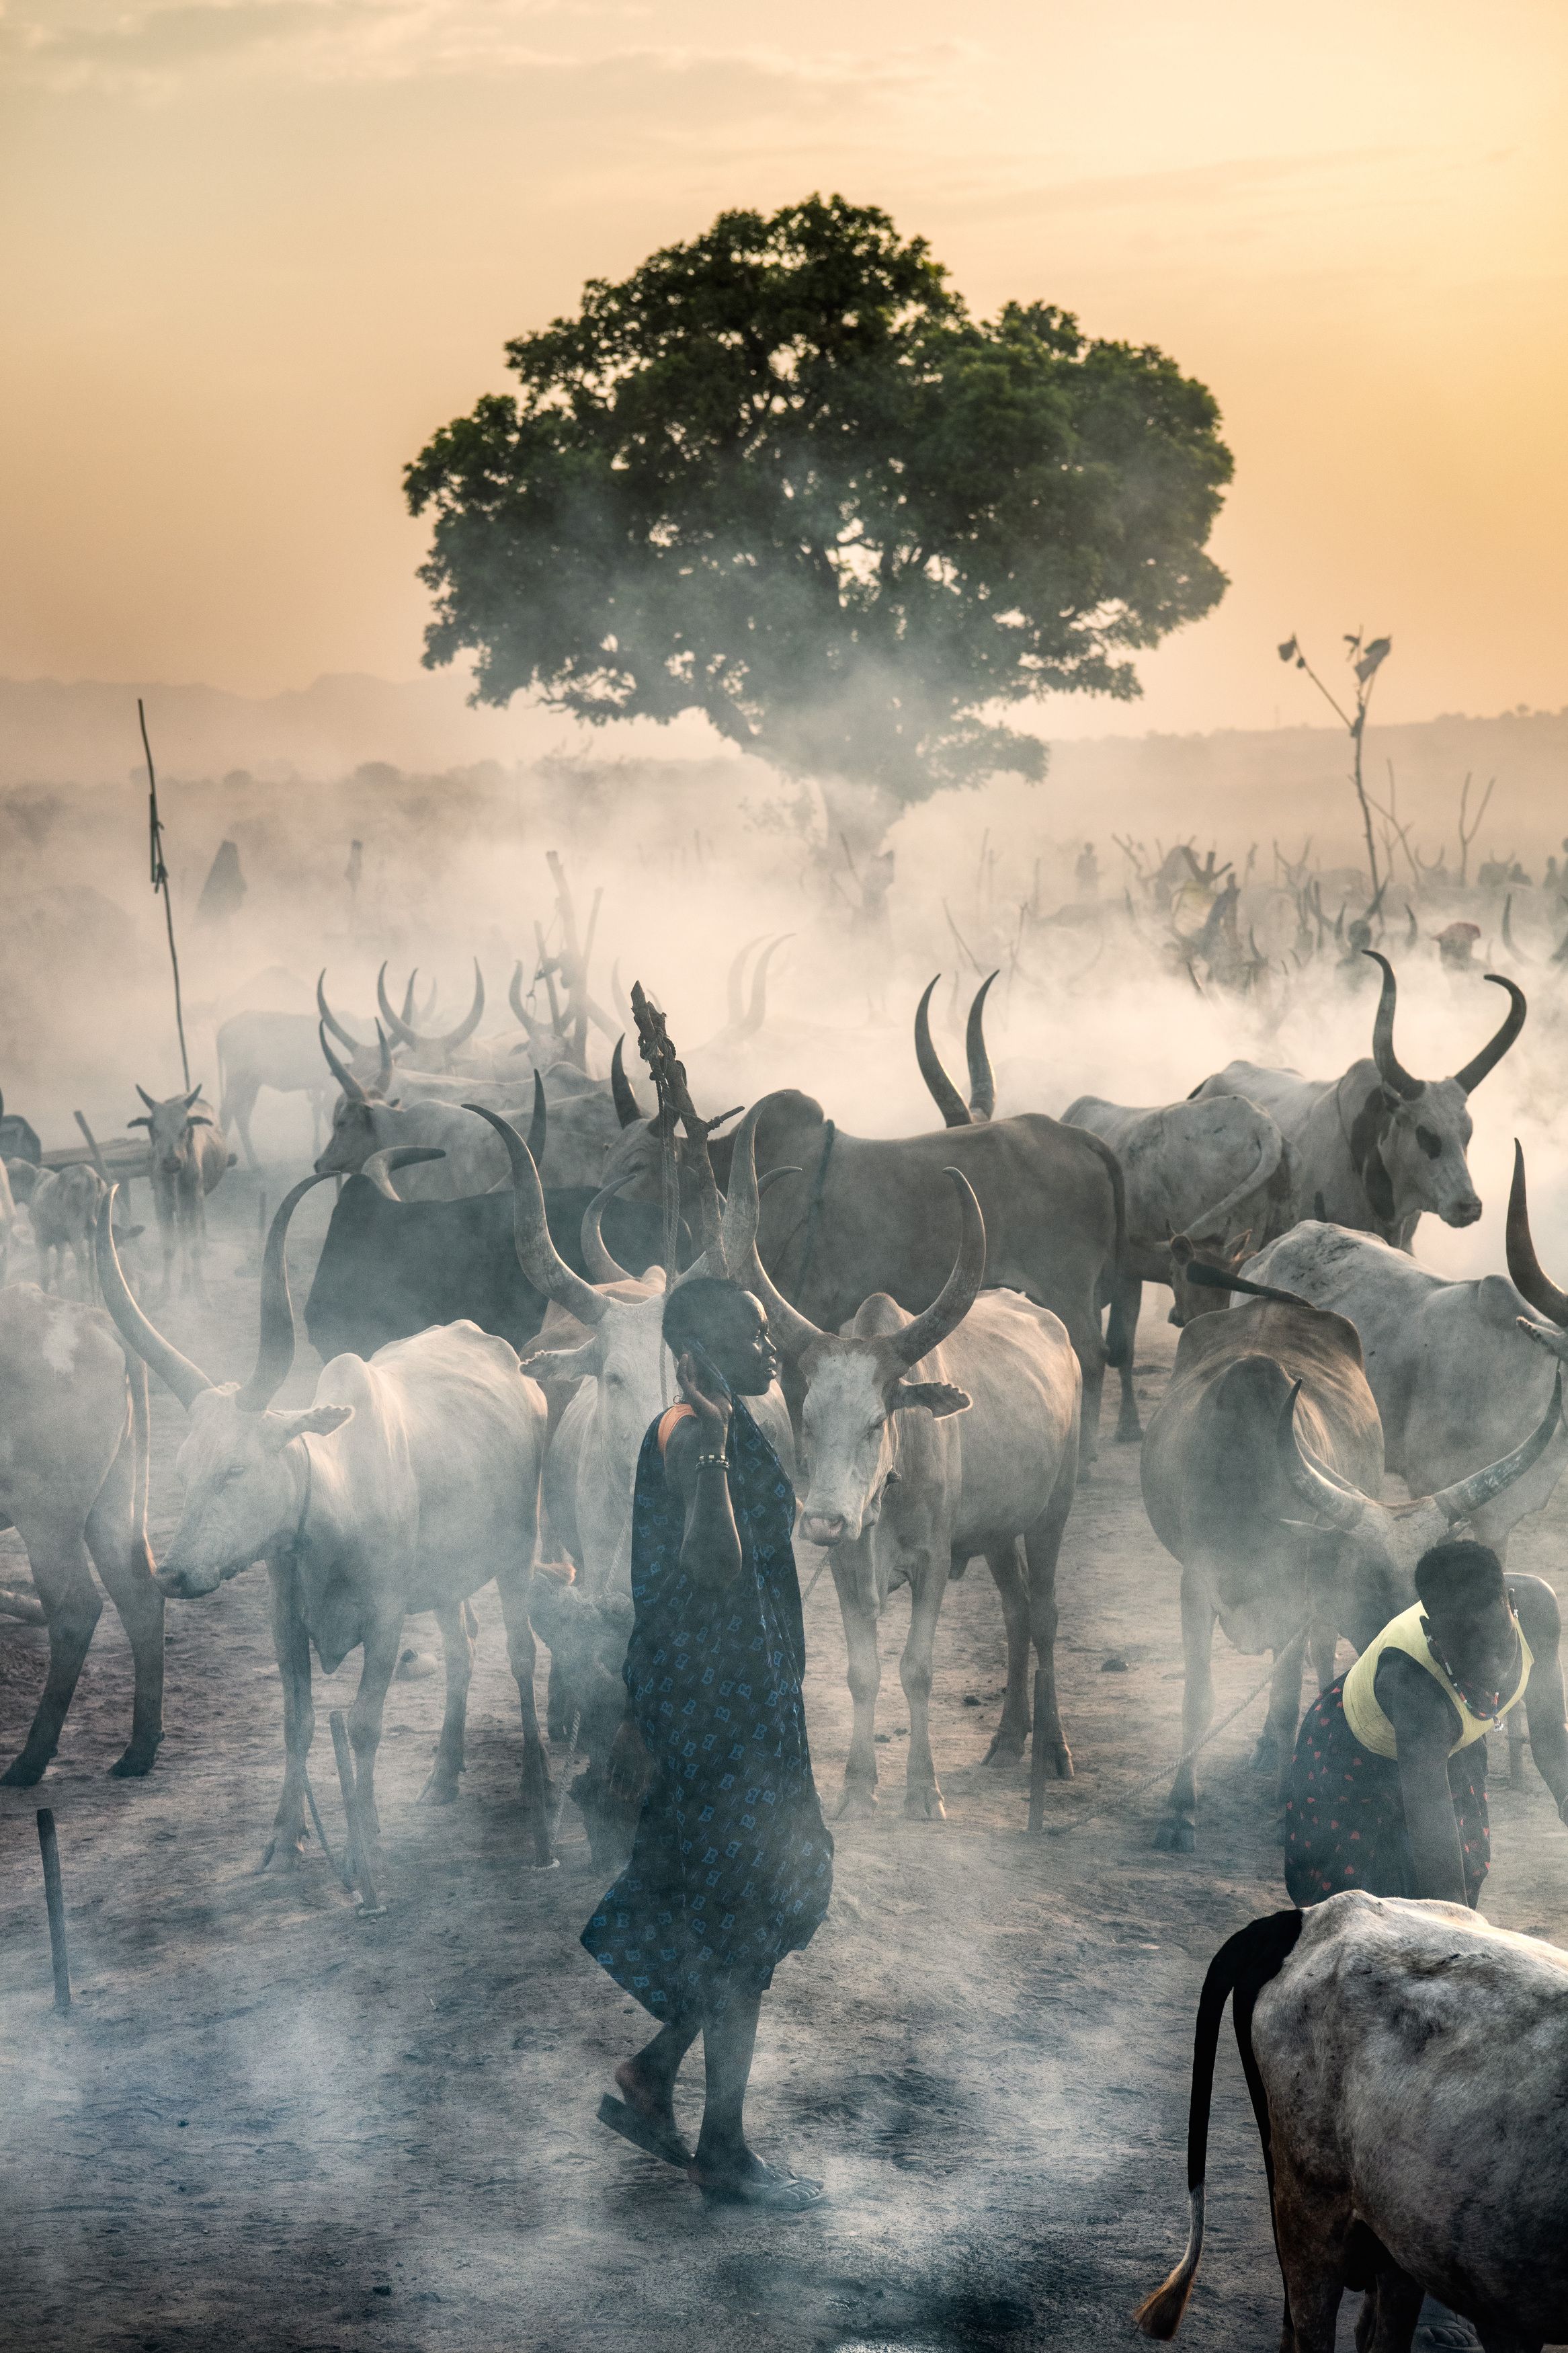 Mundari, cattle camp, South Sudan, life, culture, Africa, Trevor Cole